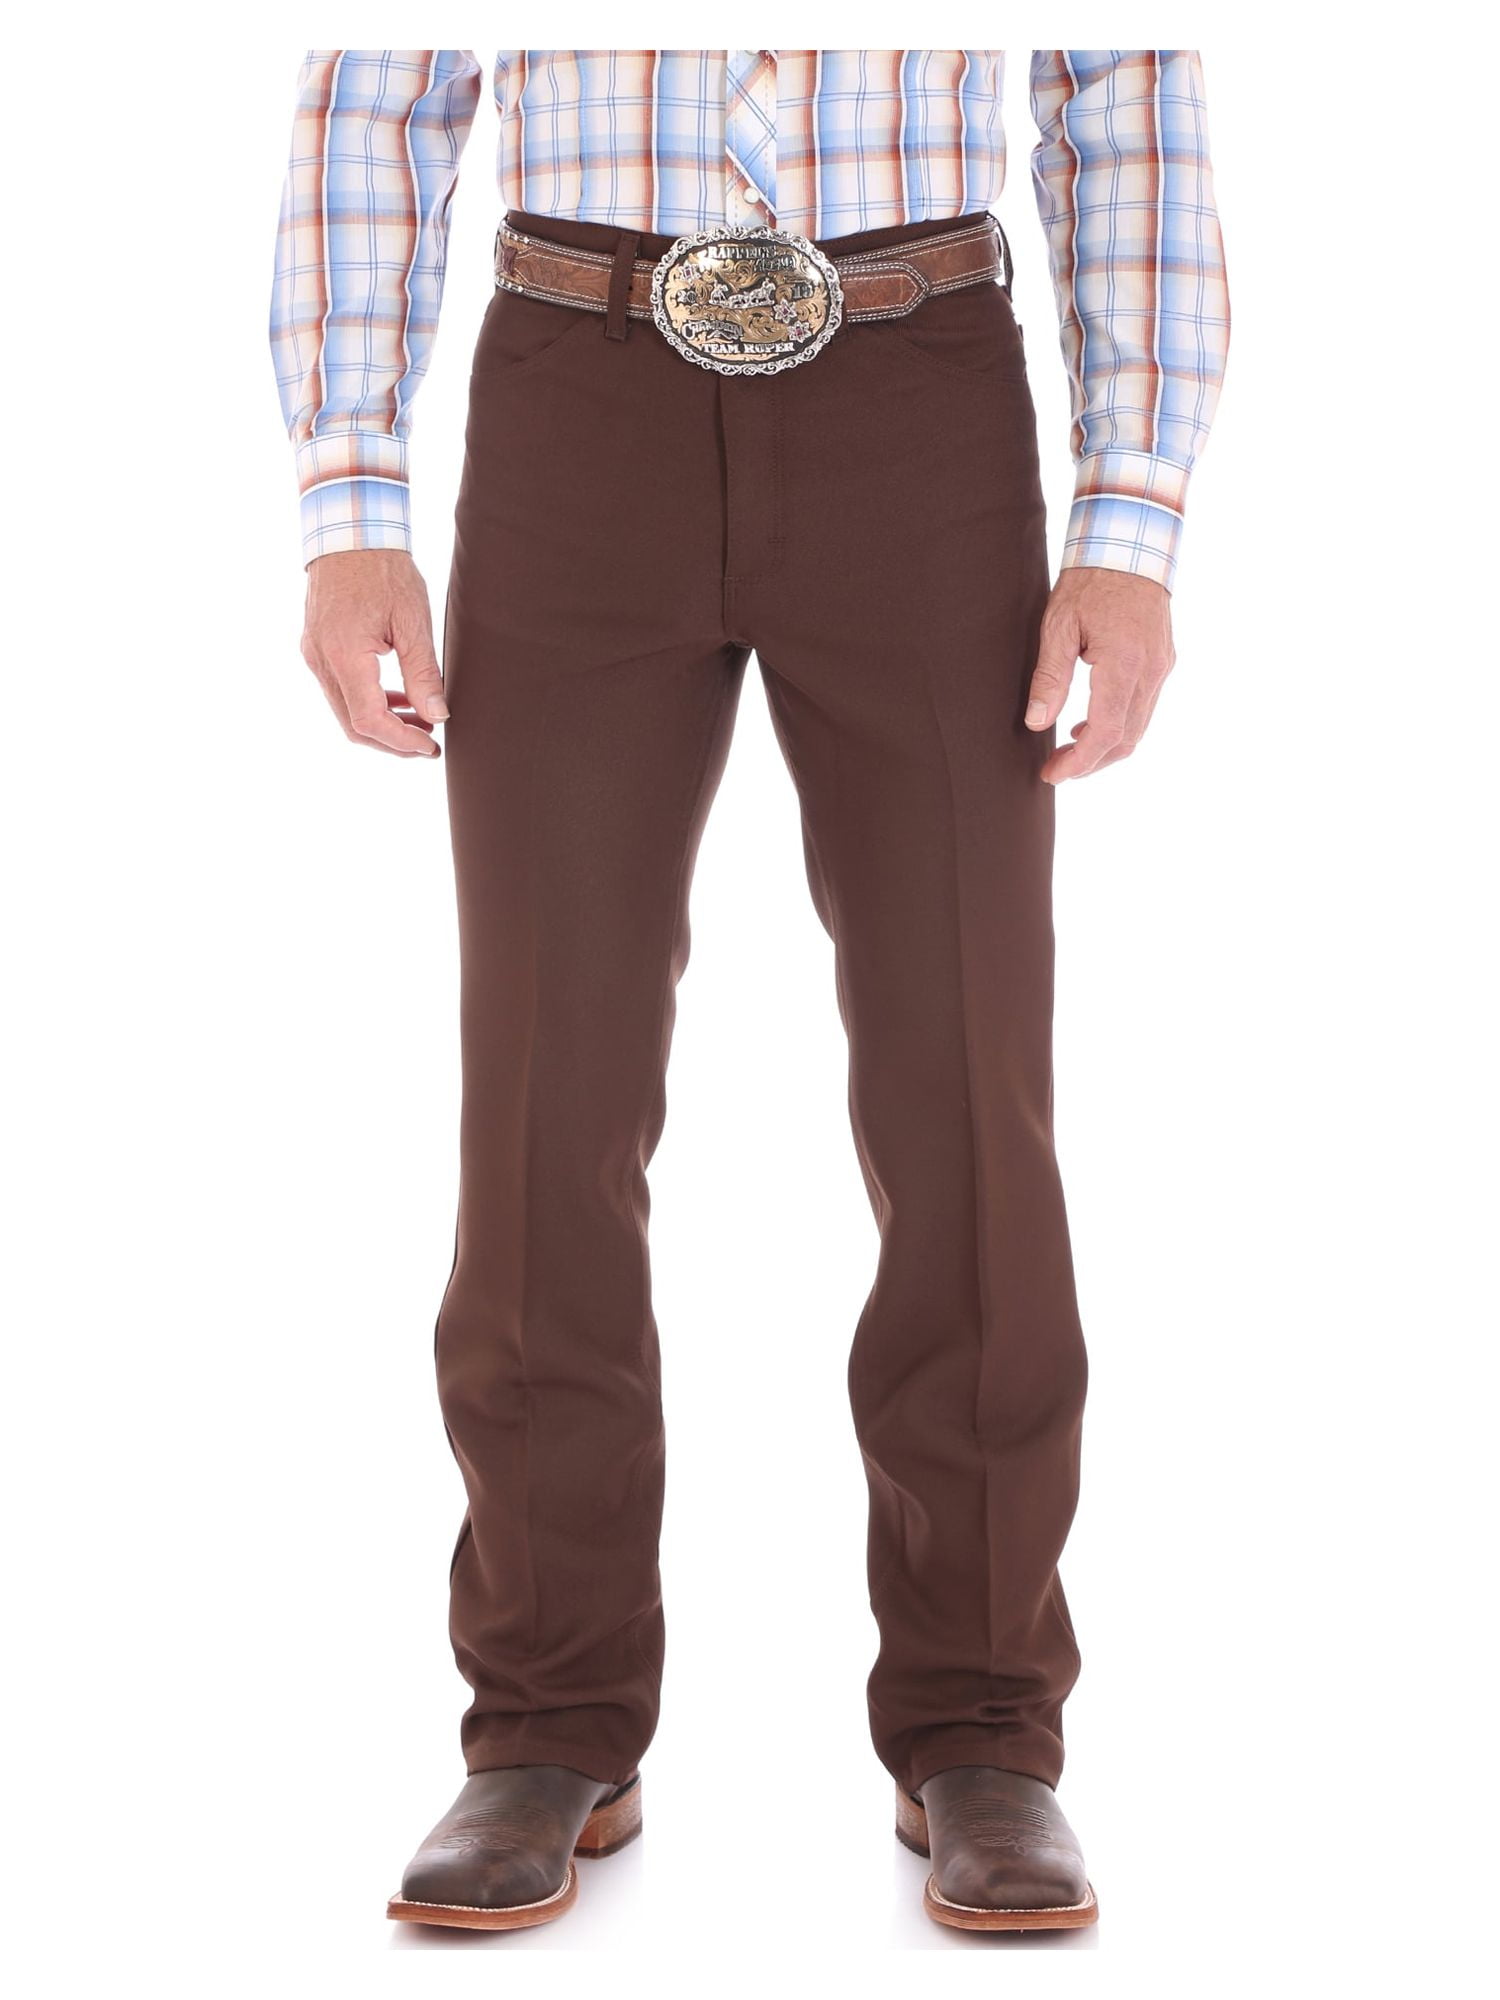 Wrangler Men's Wrancher Cowboy Twill Dress Jean with Stretch 